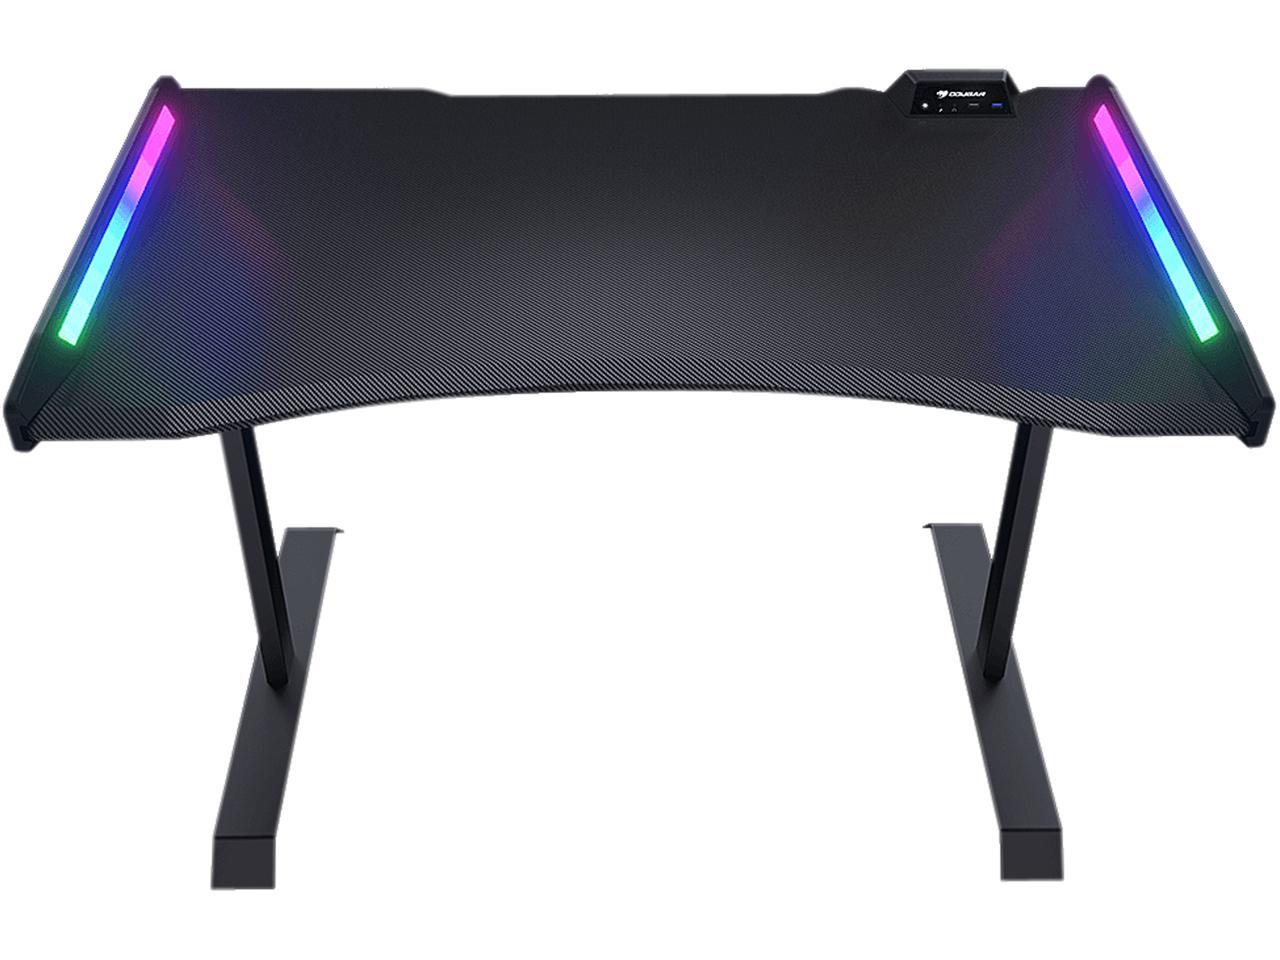 COUGAR MARS 120 (NY7D0011-00) Gaming Desks with Dazzling ARGB Lighting Effects and Ergonomic Design - Newegg.com